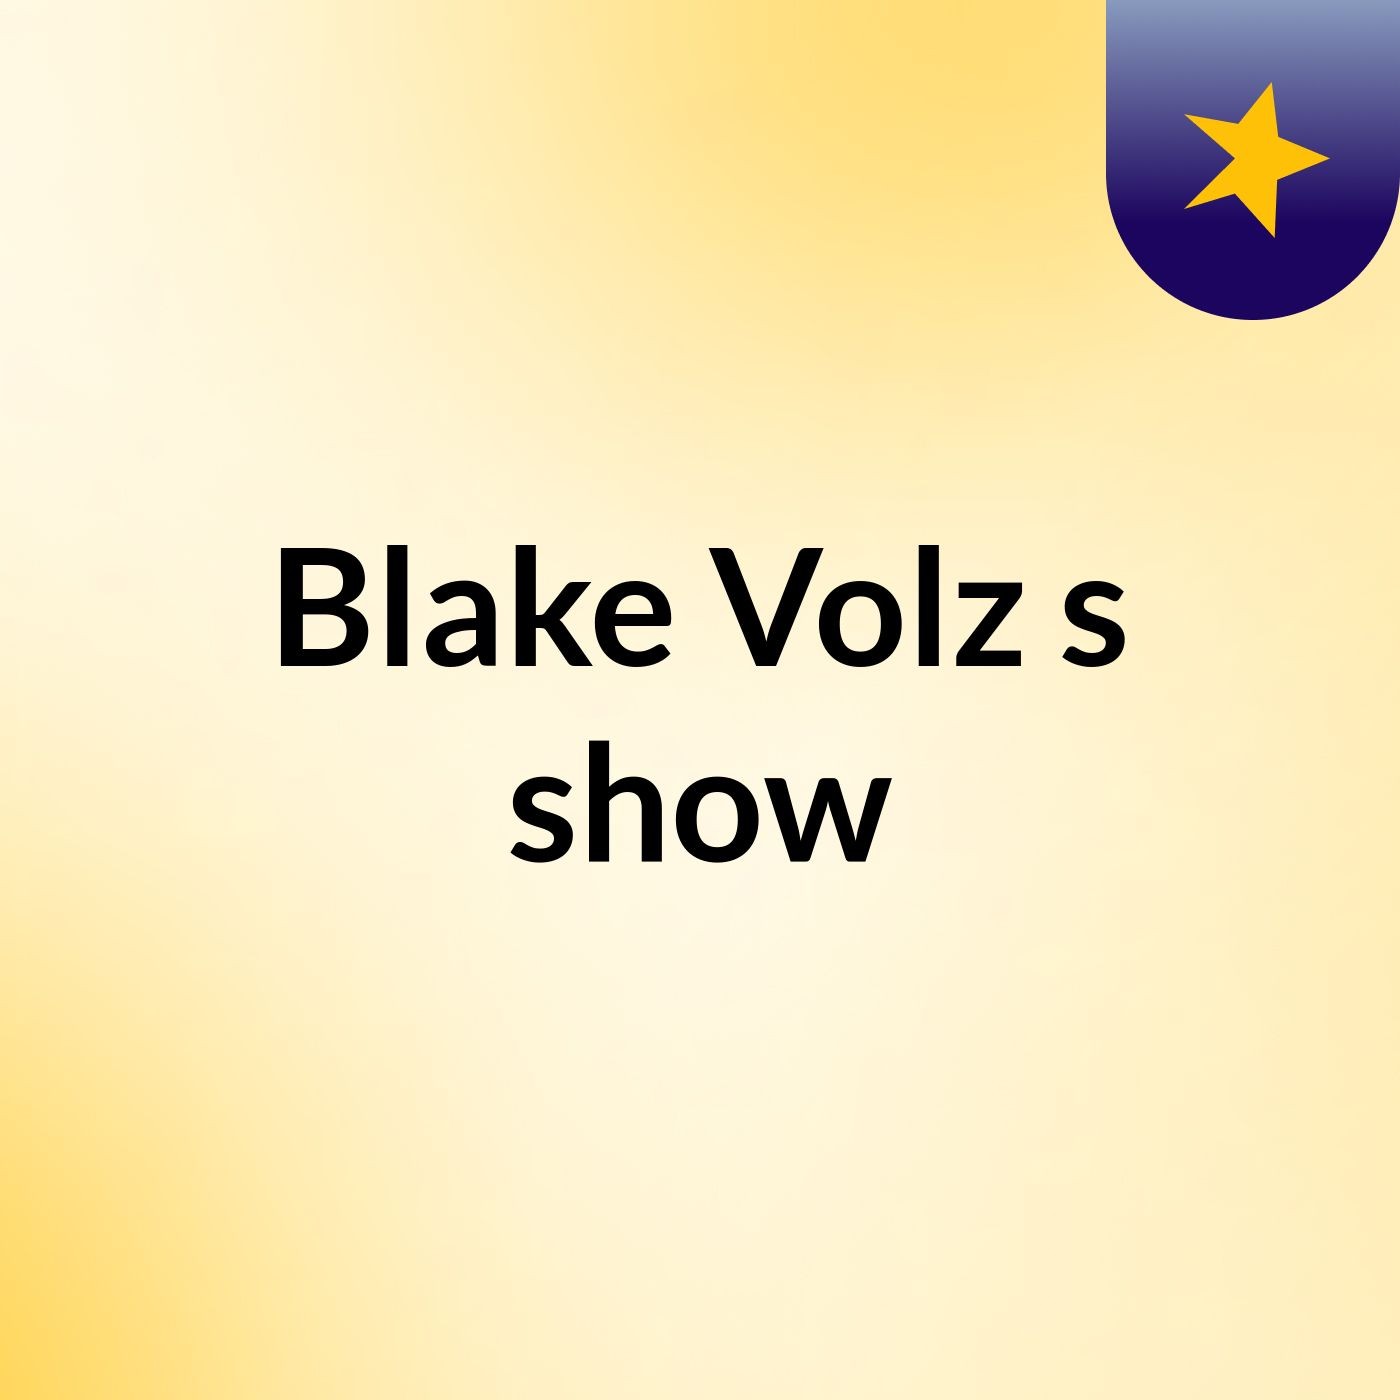 Episode 25 - Blake Volz's show